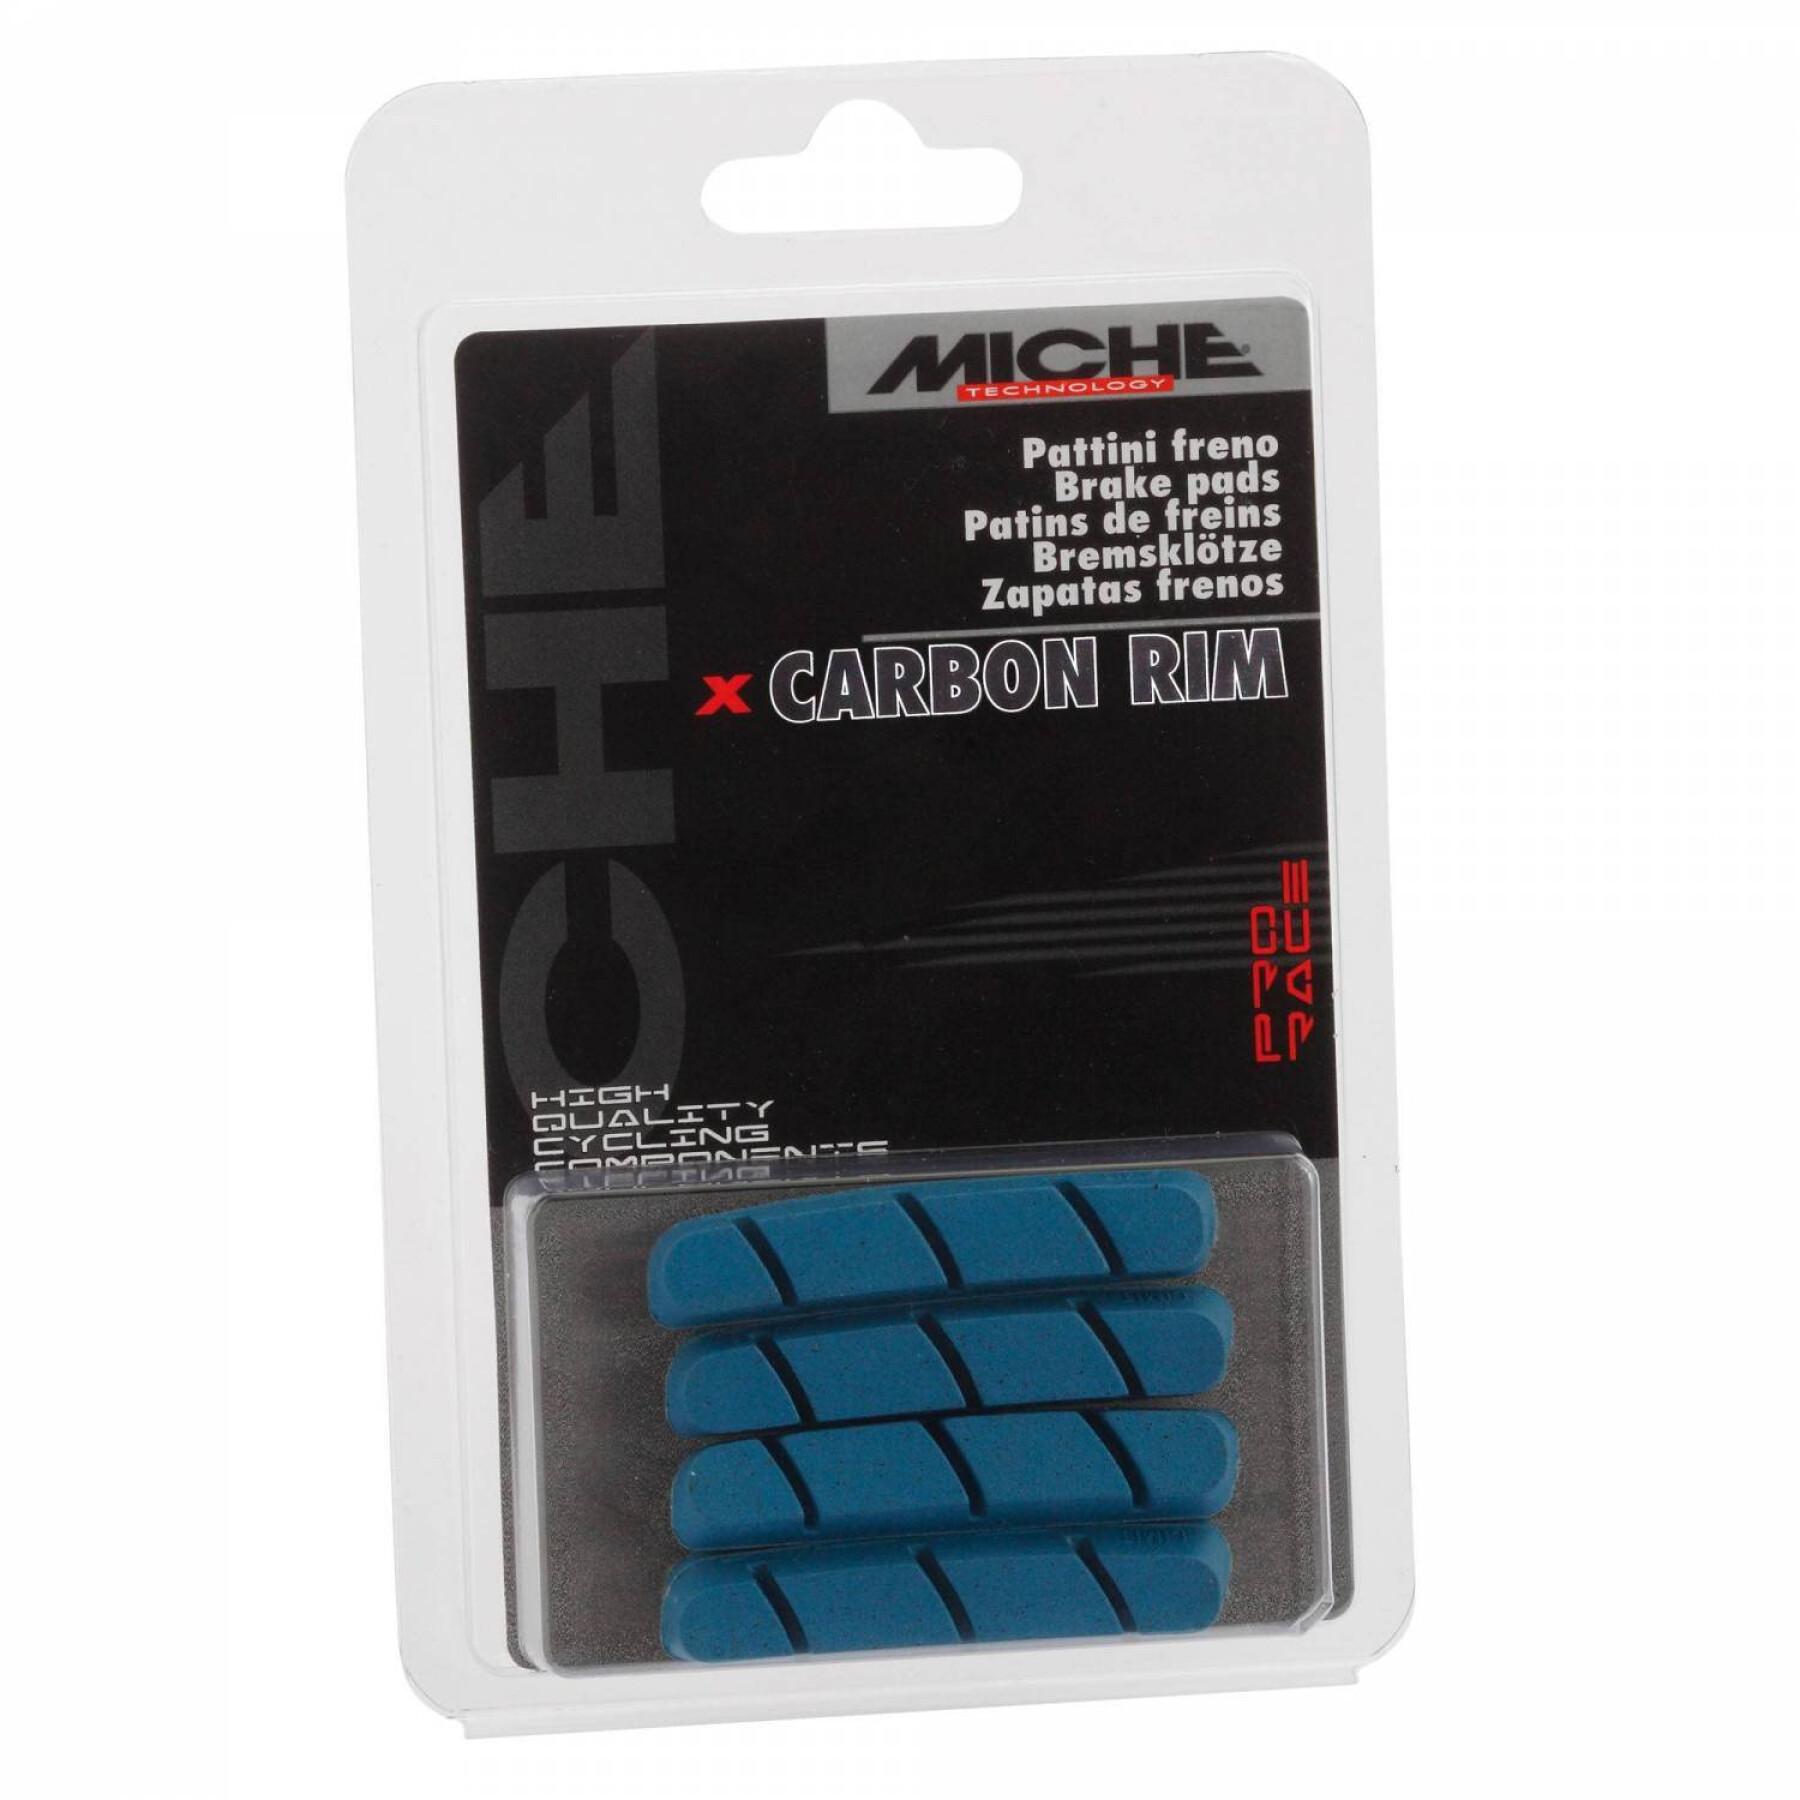 Brake pads for carbon rims Miche Campagnolo (x4)